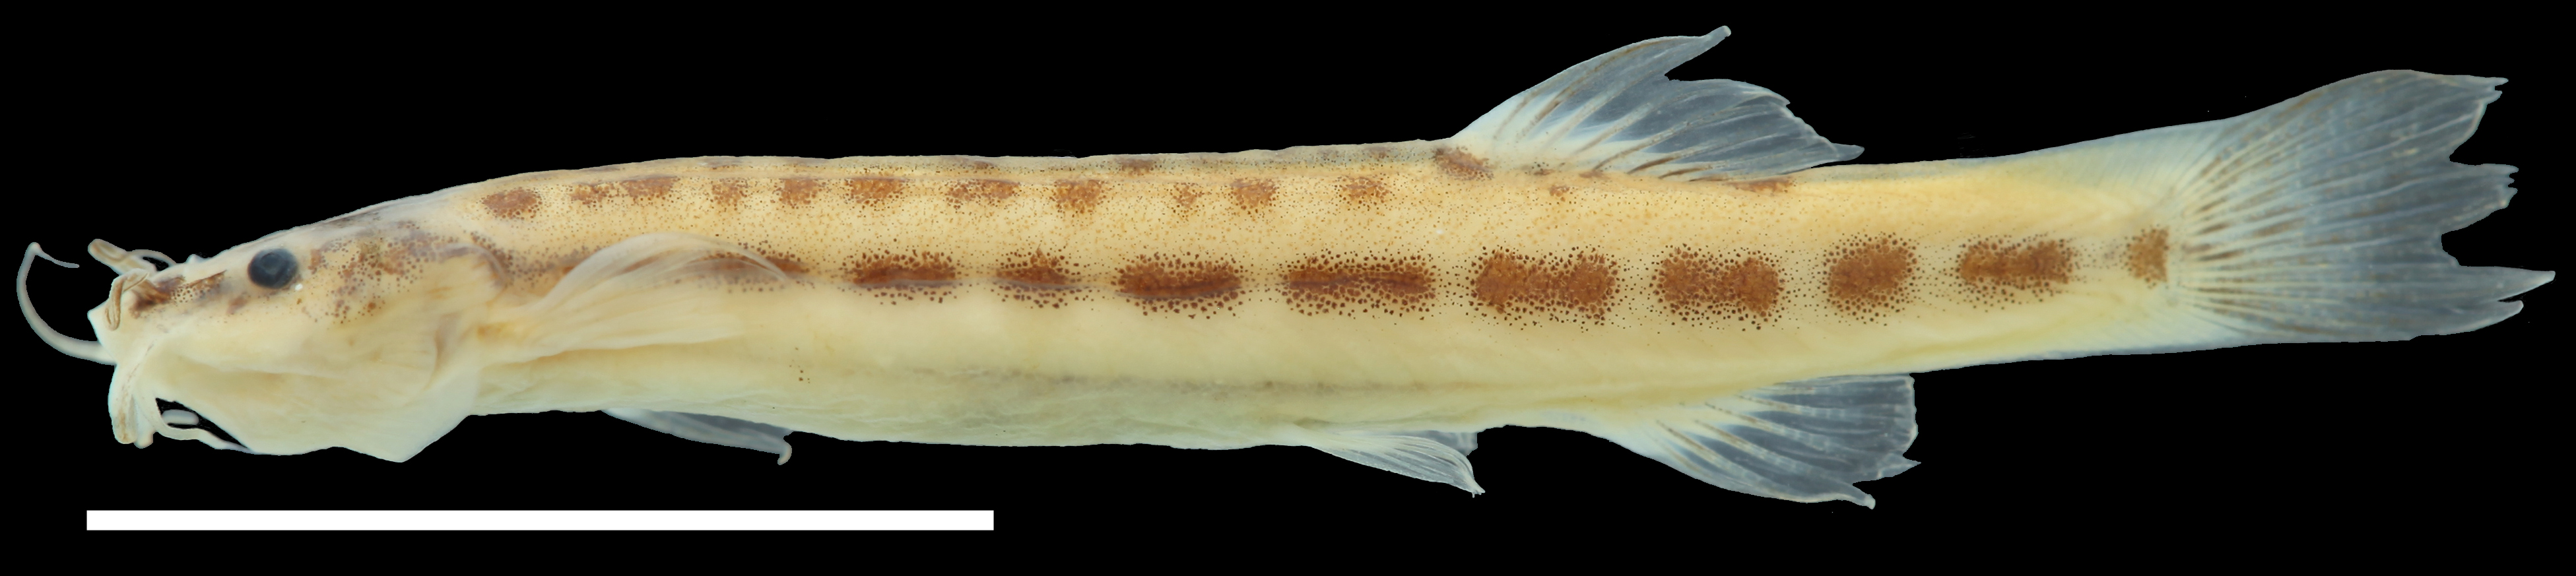 Paratype of <em>Trichomycterus maldonadoi</em>, IAvH-P-11533_Lateral, 22.7 mm SL (scale bar = 1 cm). Photograph by C. DoNascimiento